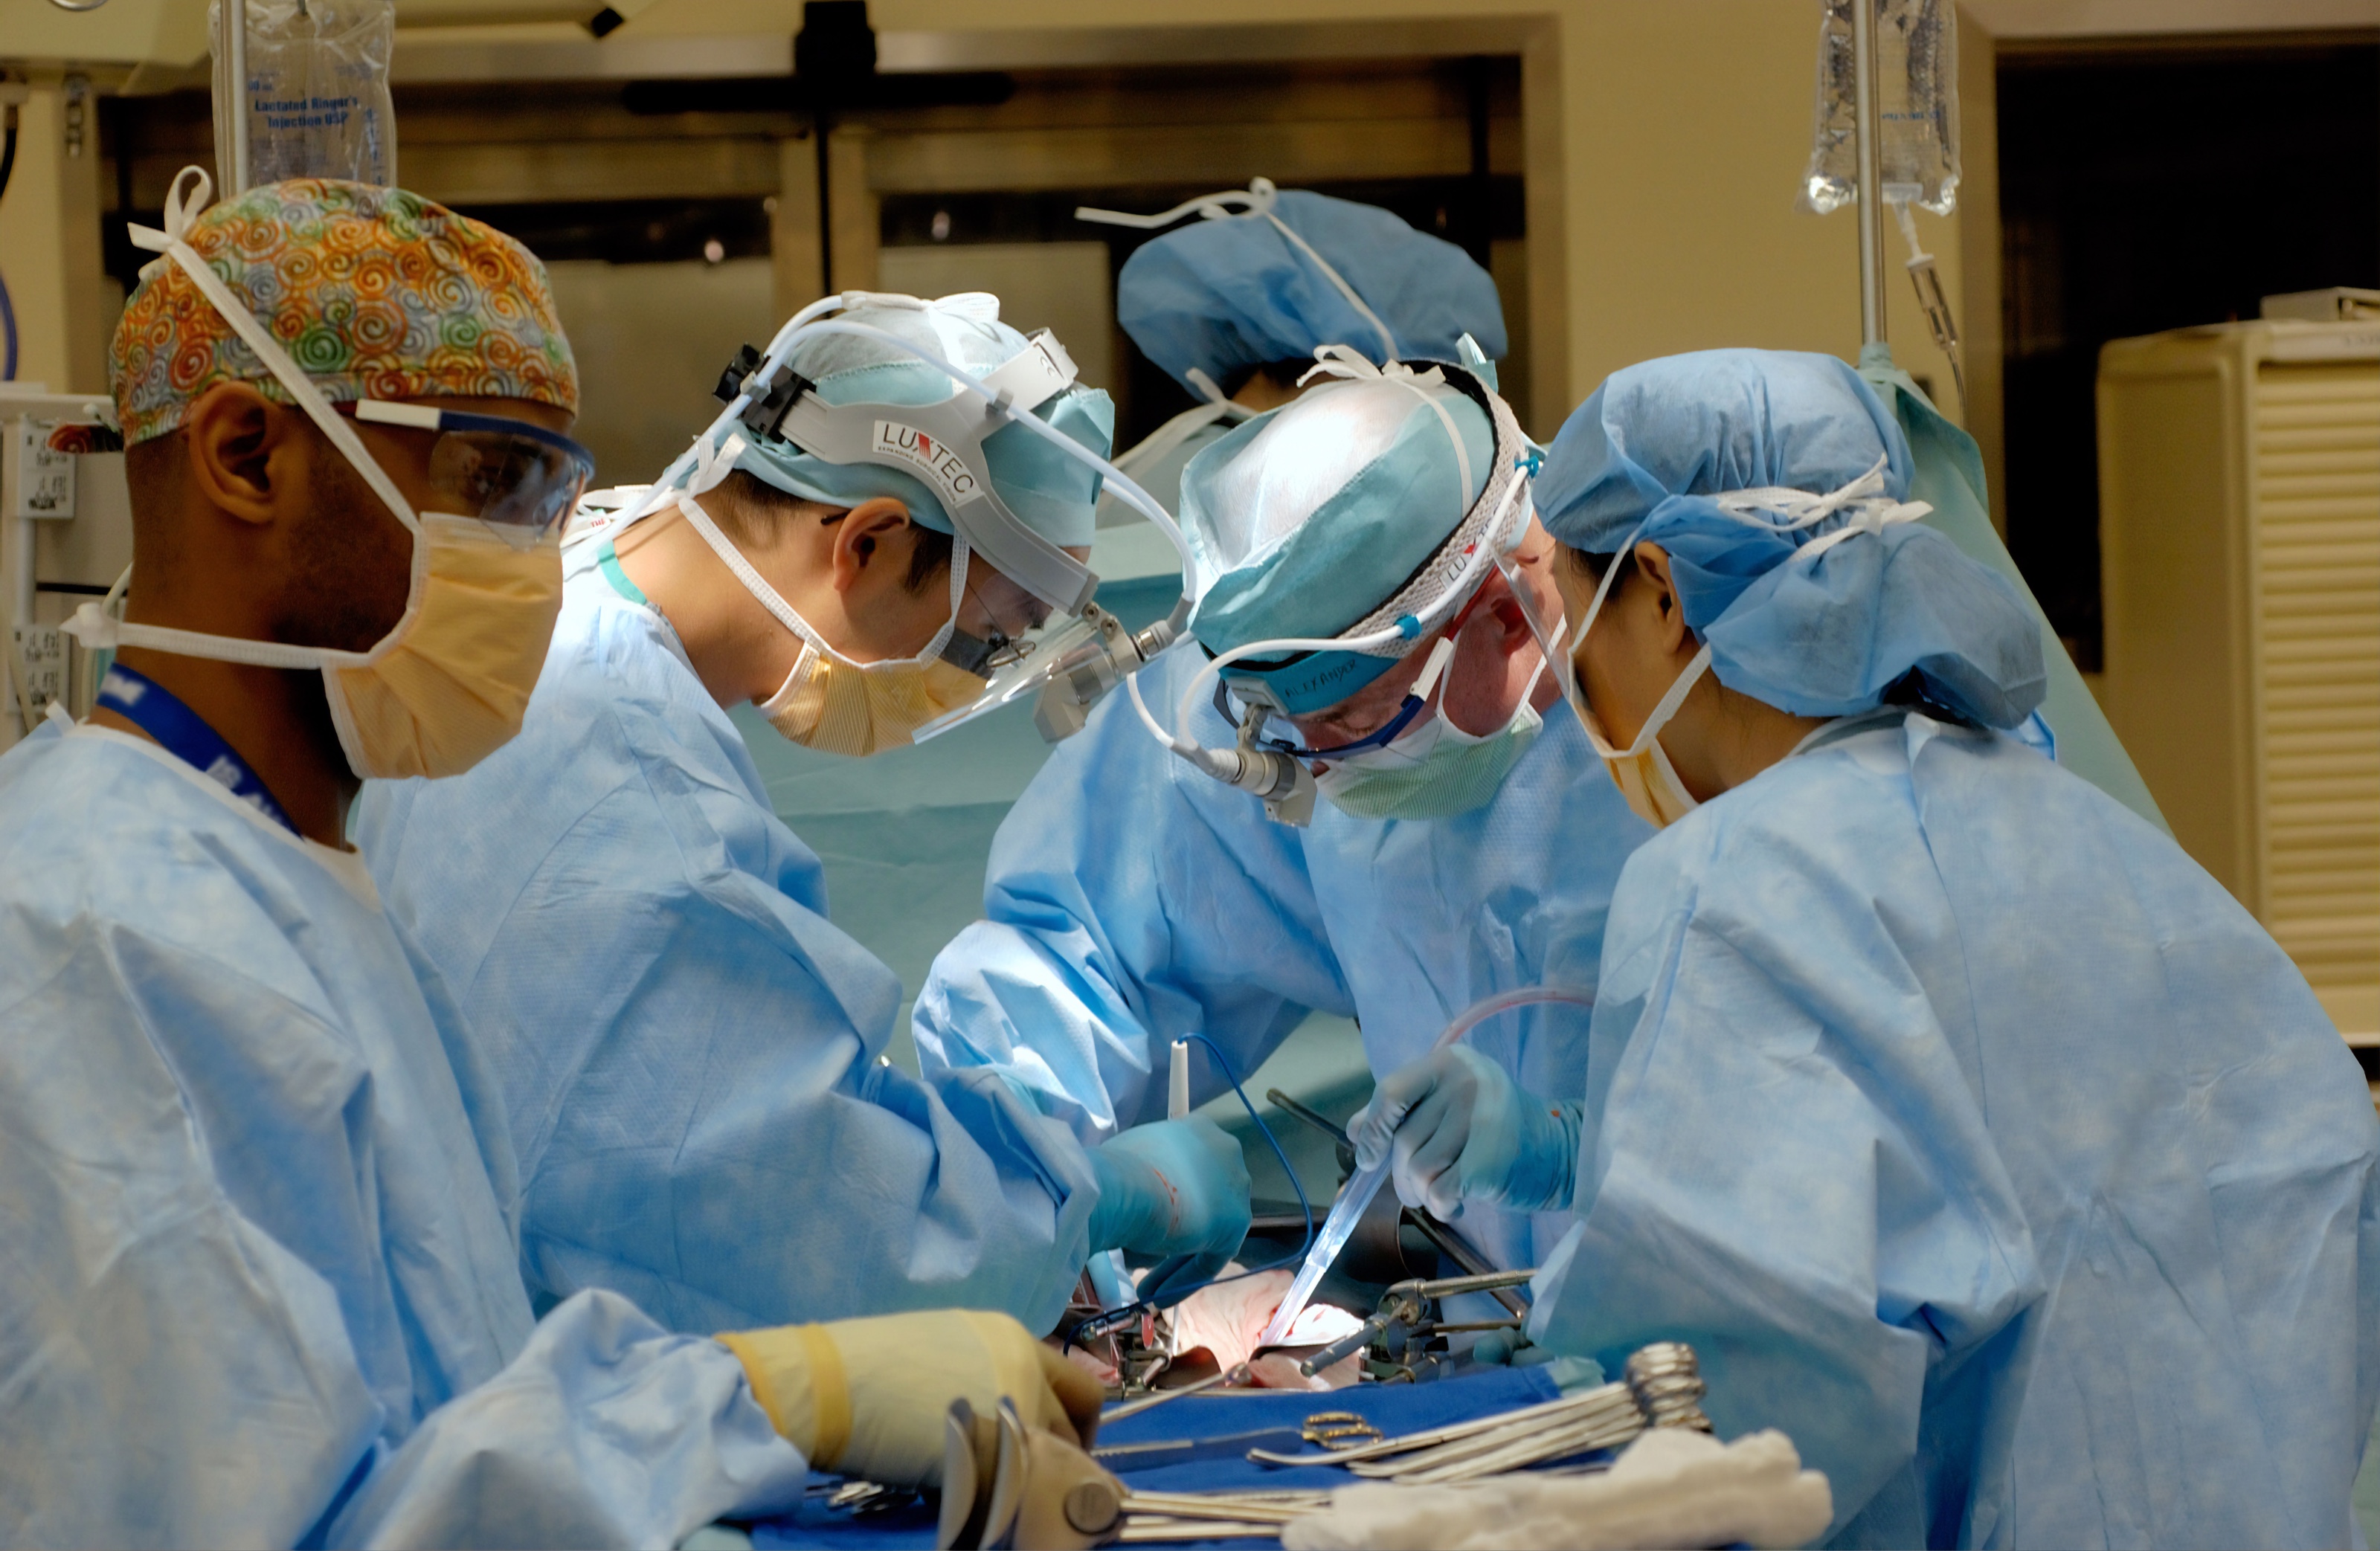 Surgeons in scrubs working on patient